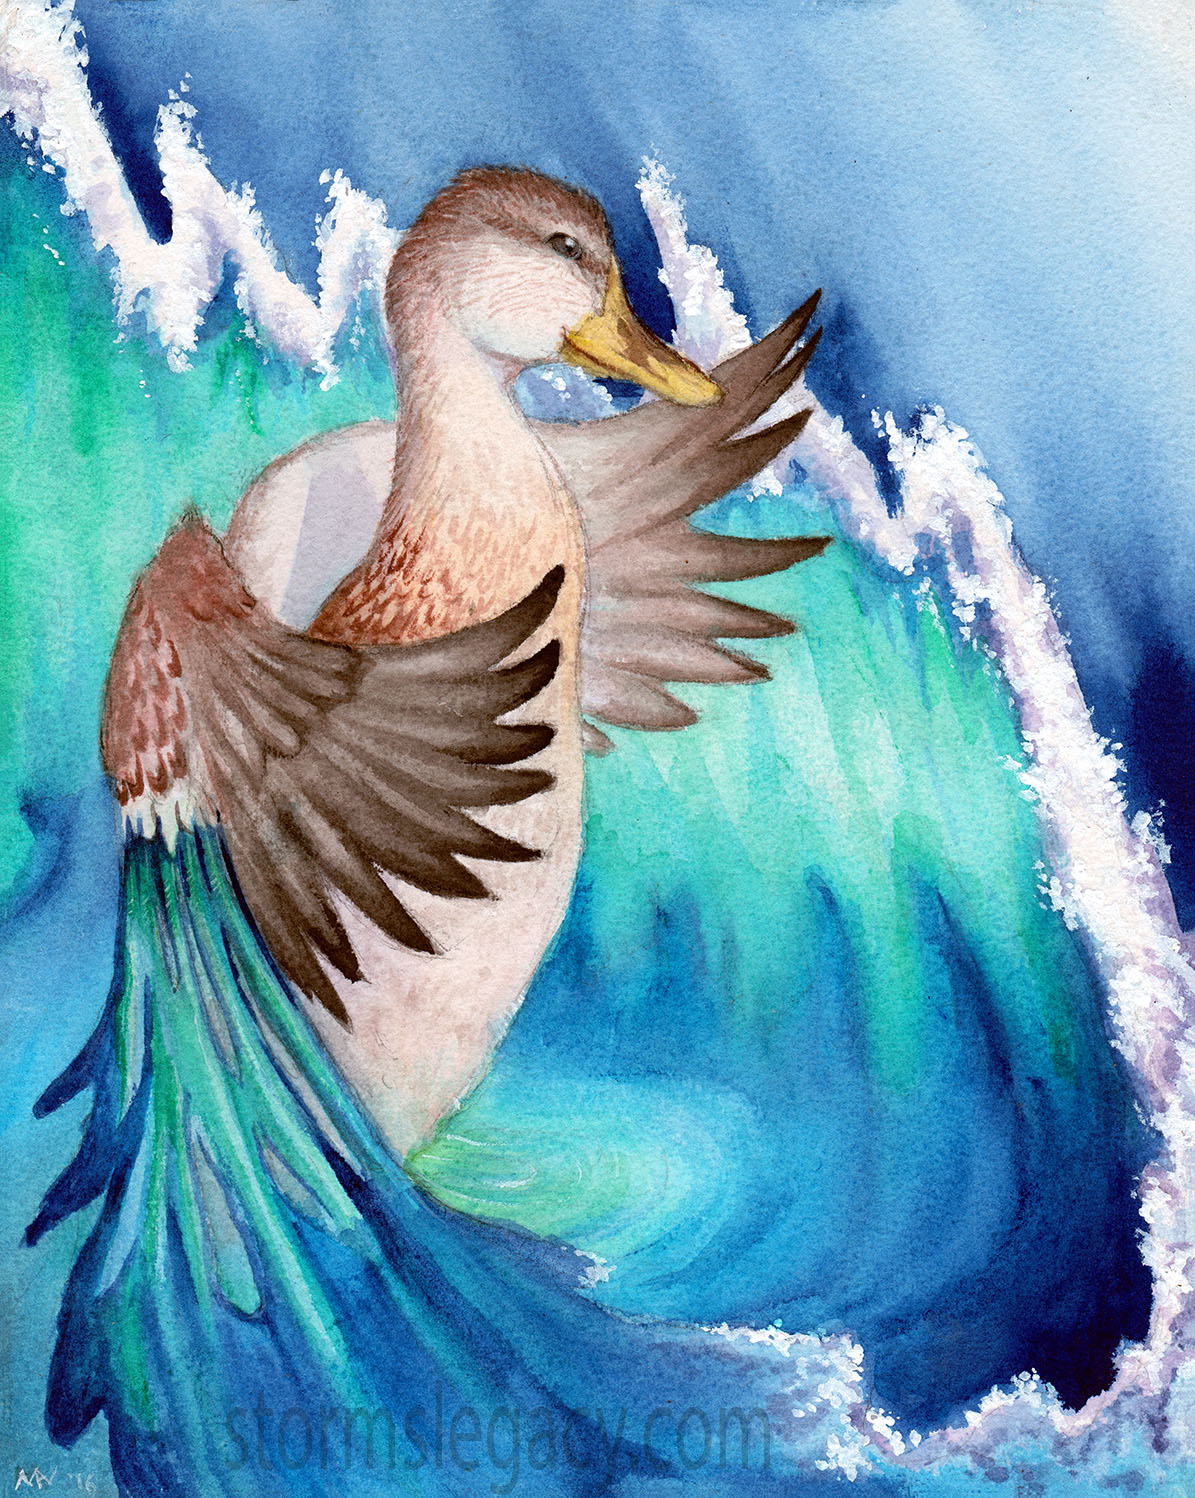 surreal mallard duck creating ocean wave in watercolor